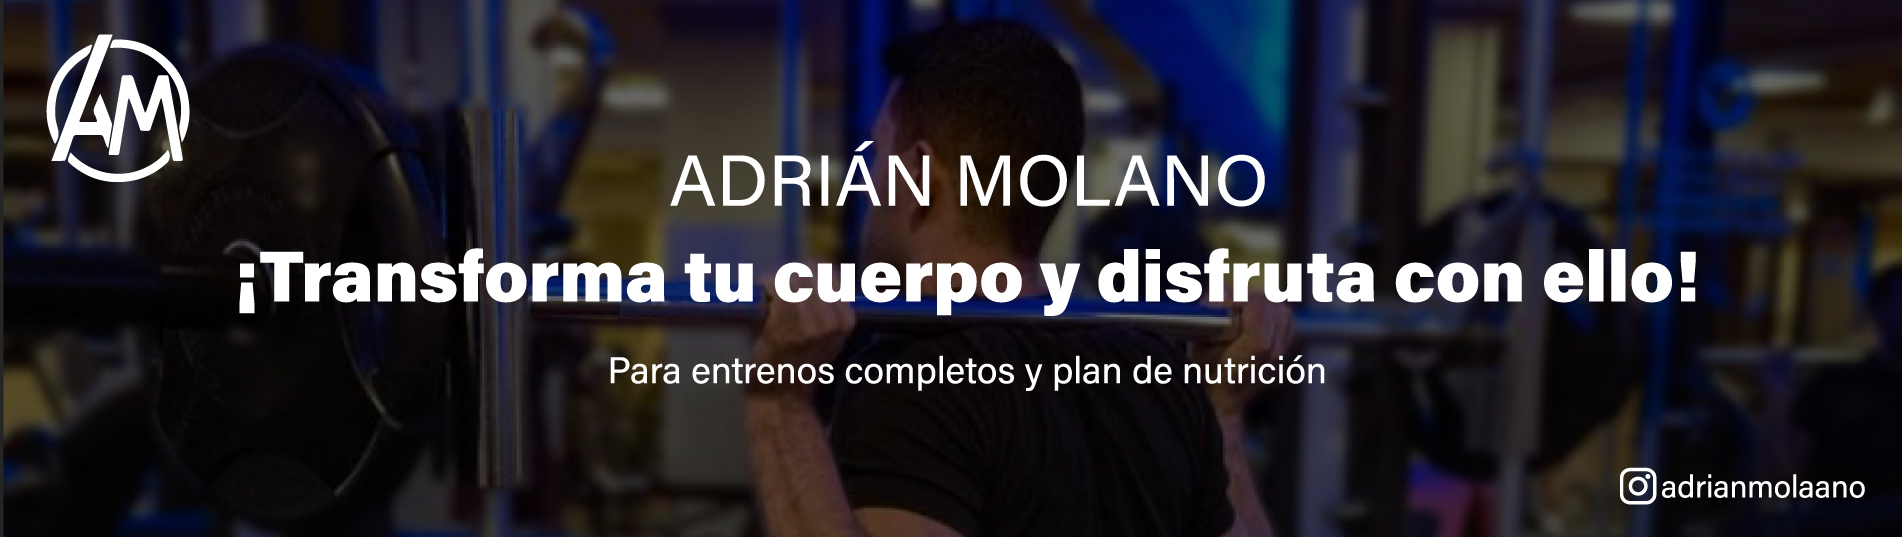 Adrián Molano